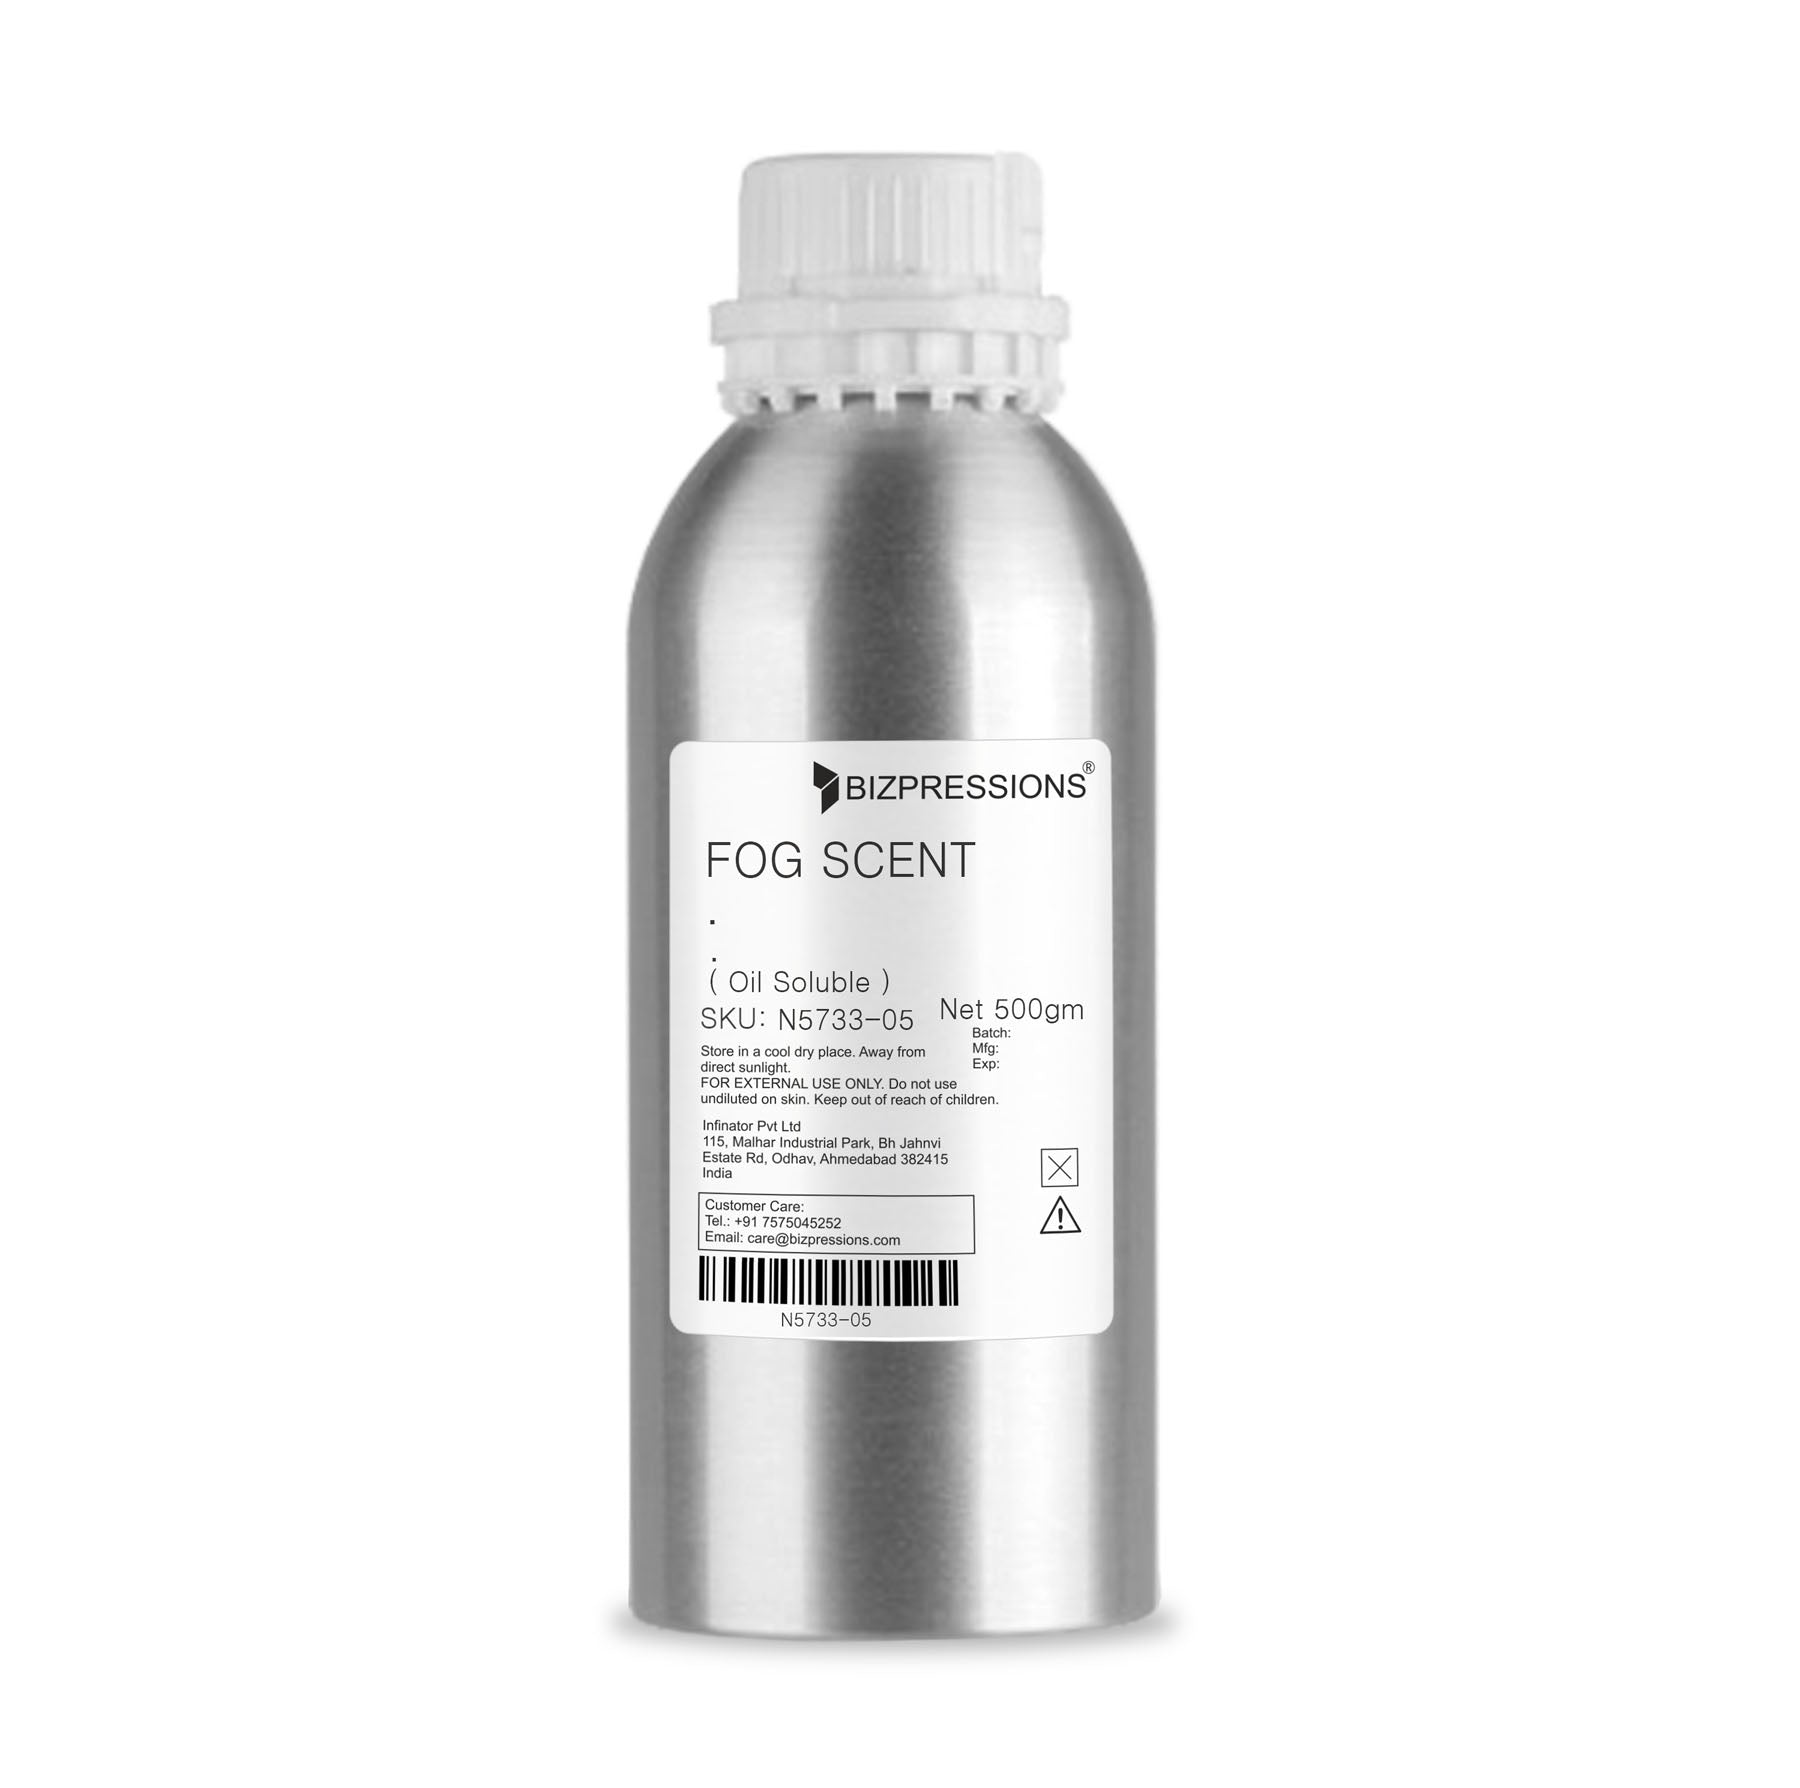 FOG SCENT - Fragrance ( Oil Soluble ) - 500 gm